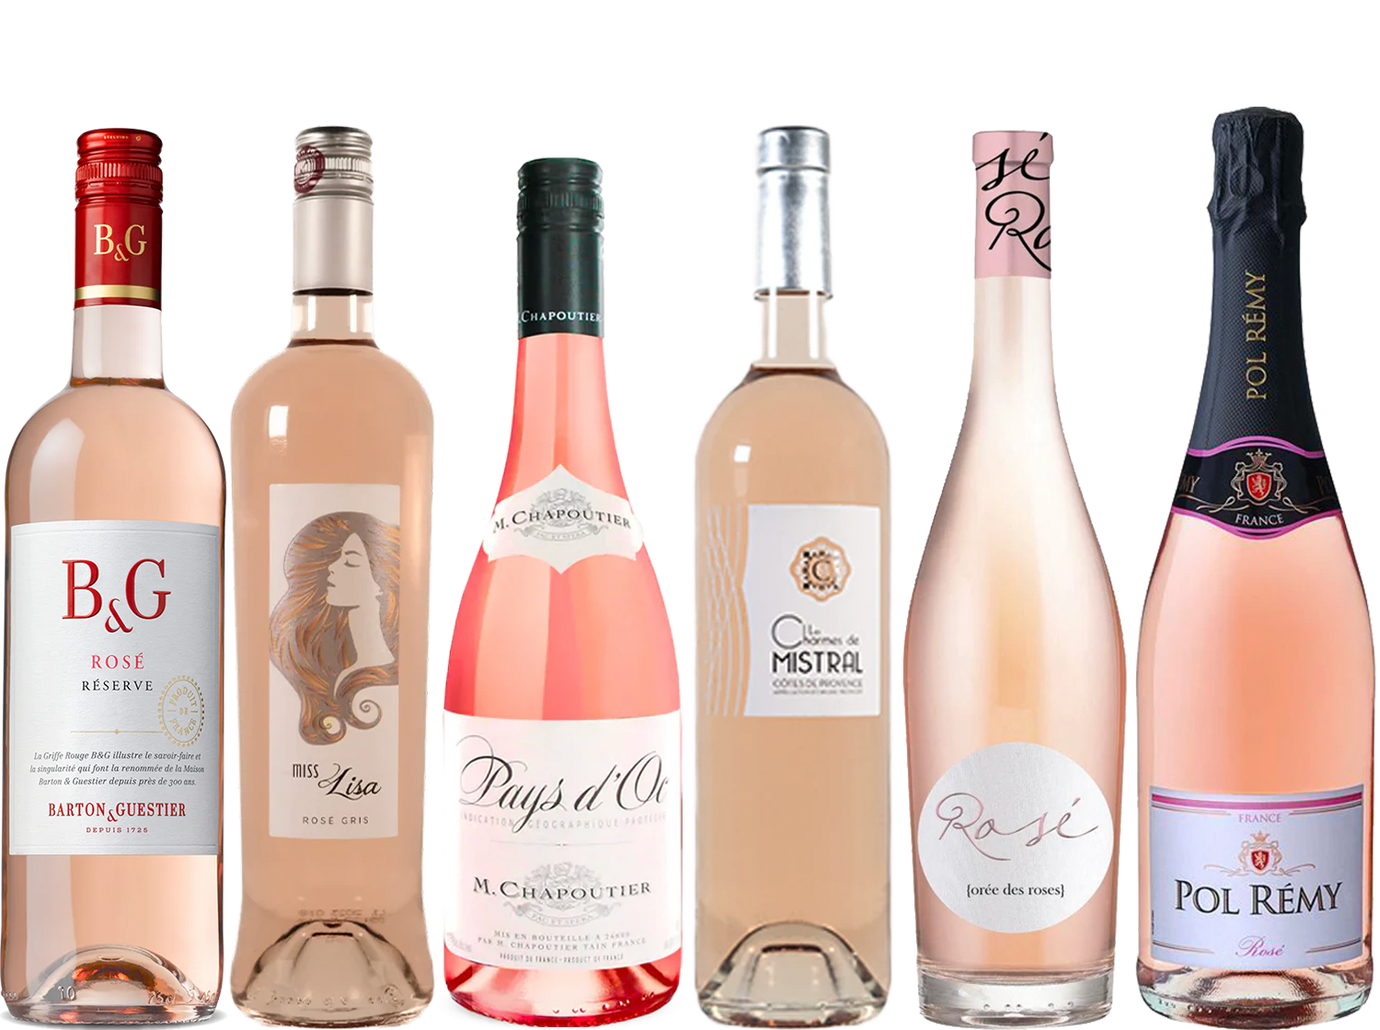 French Rosé 6 Bottle Case